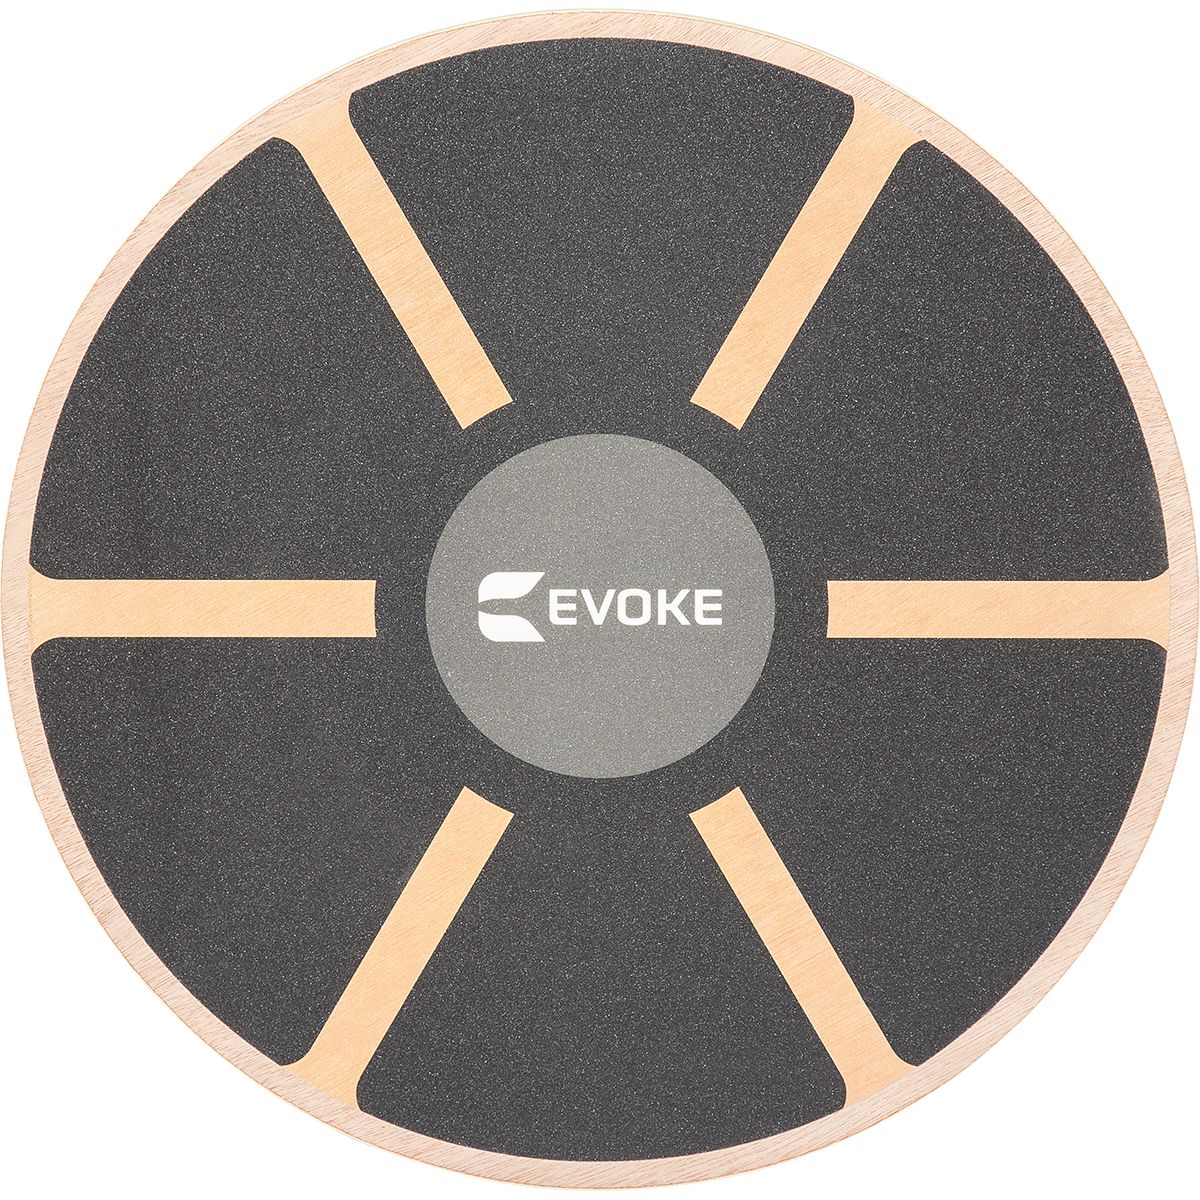 Image of Evoke Balance Board